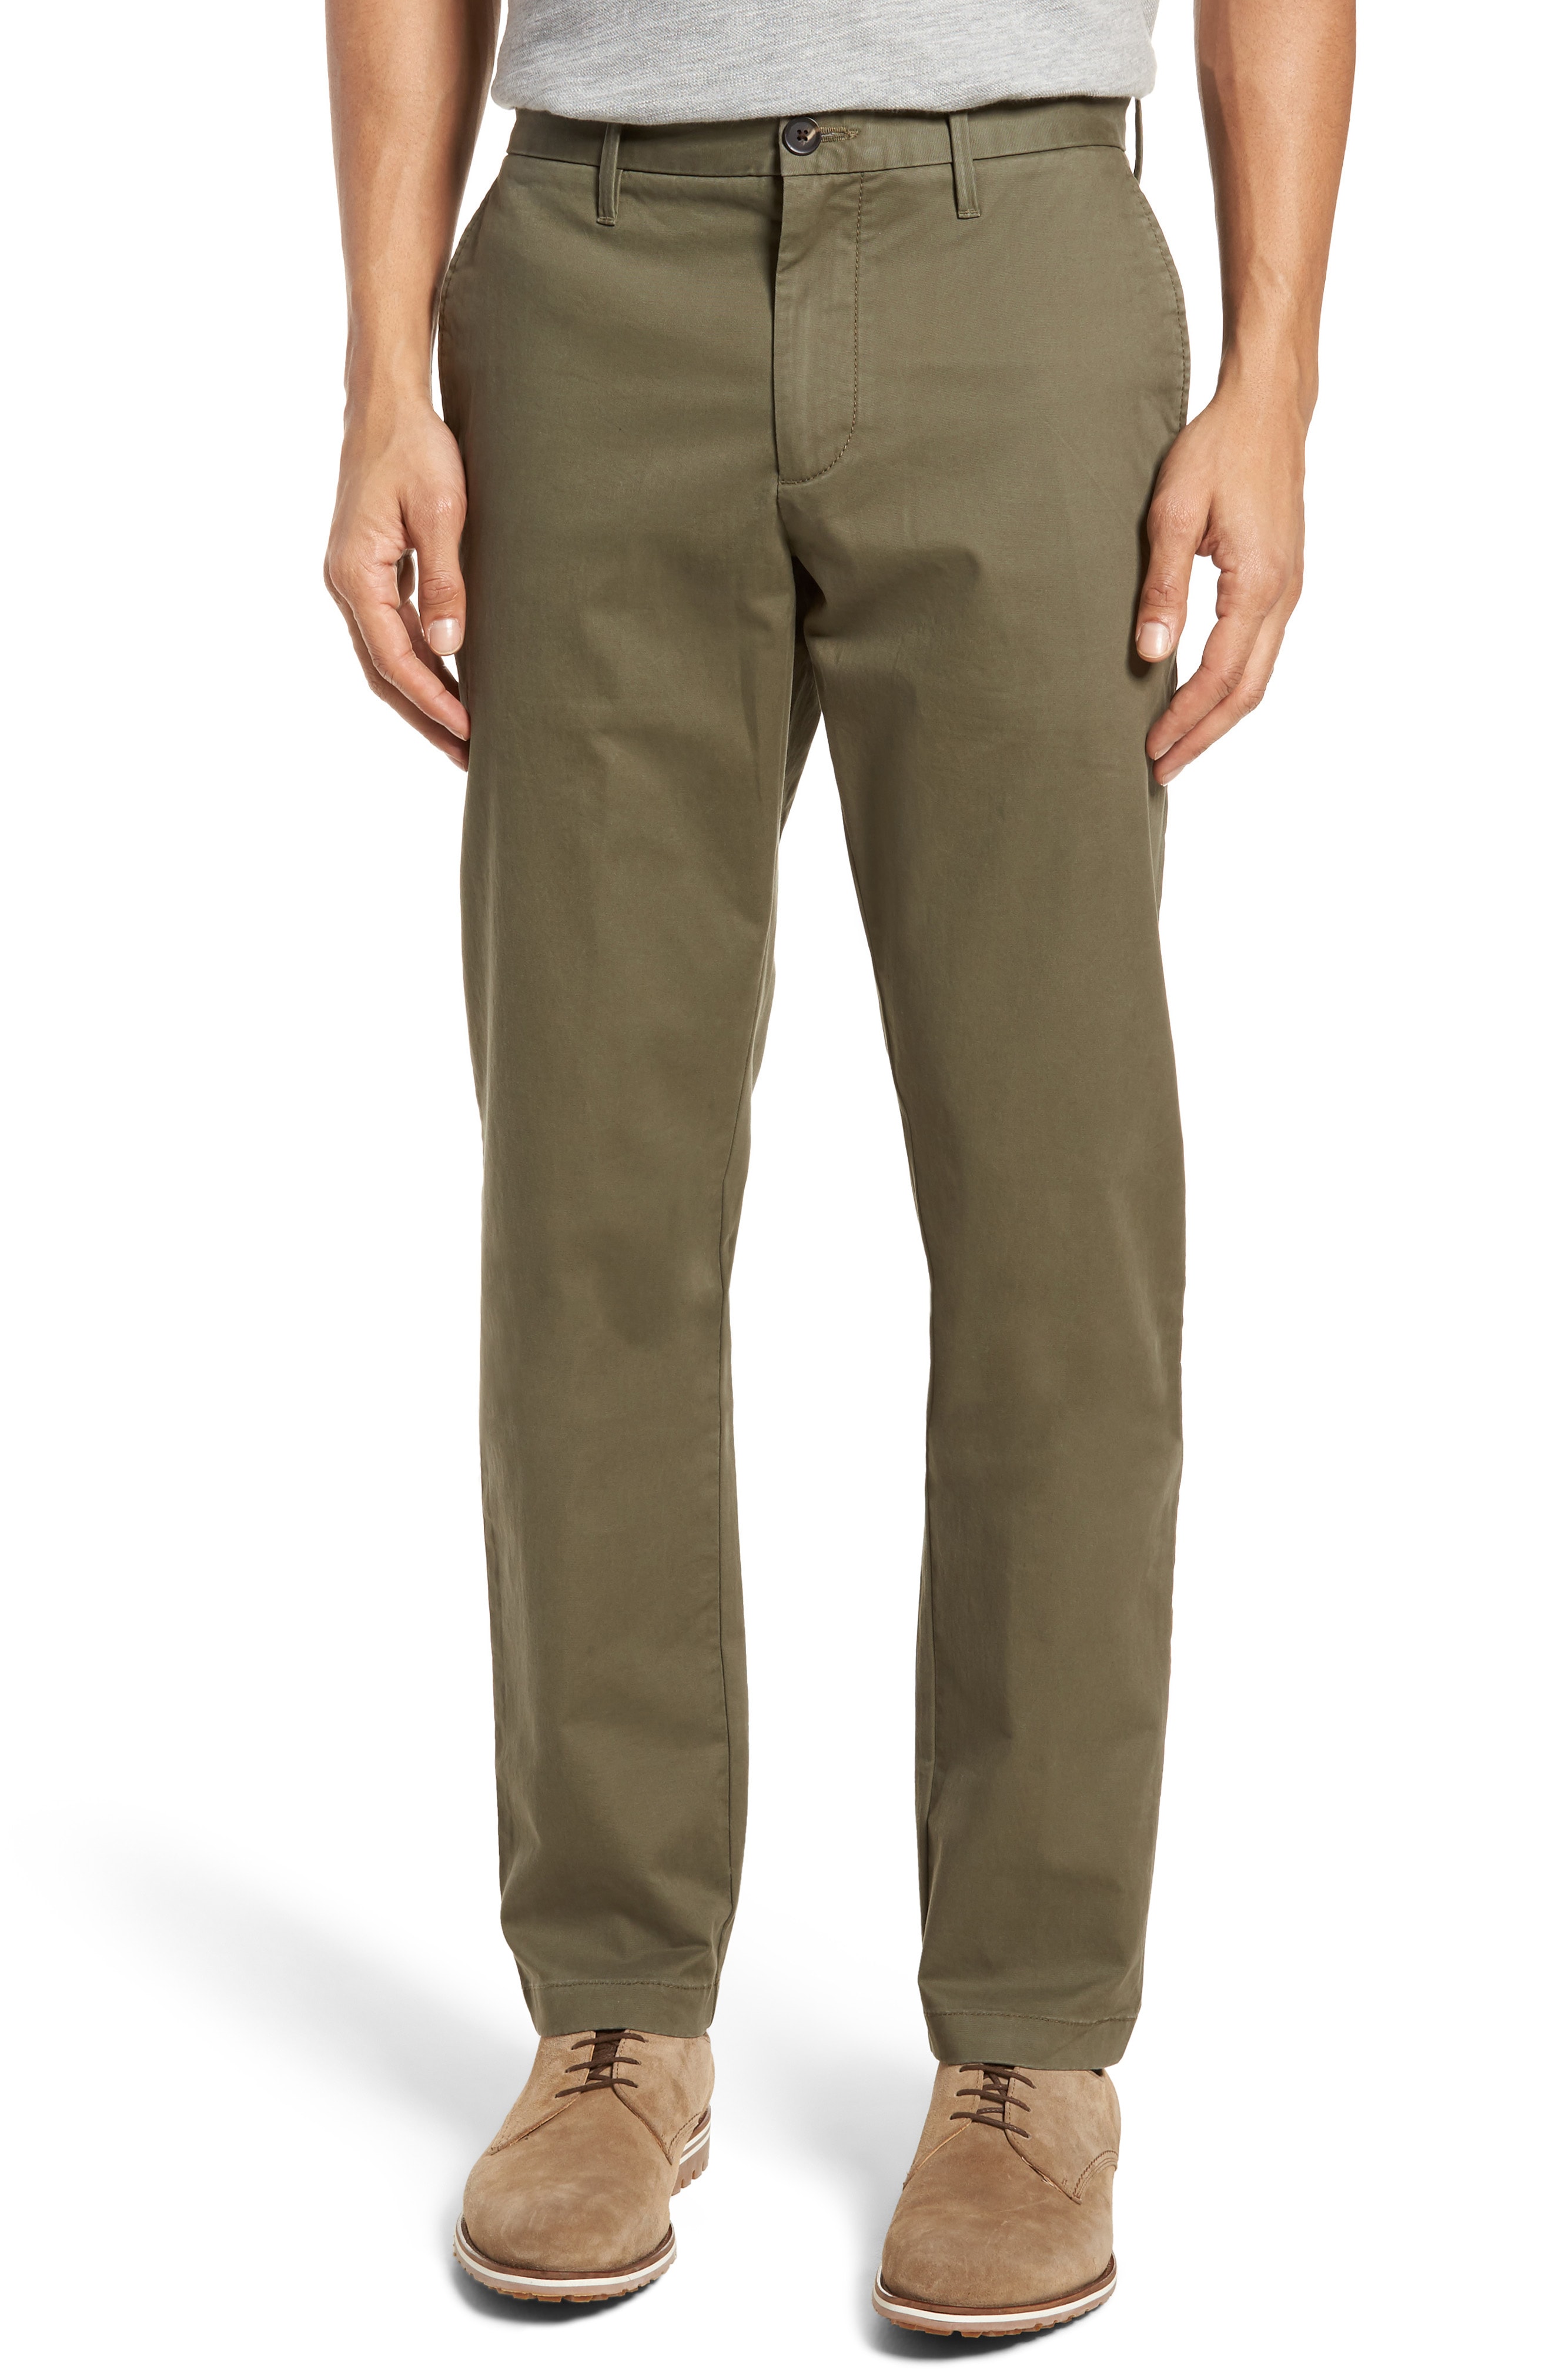 Men's Green Chinos & Khaki Pants | Nordstrom